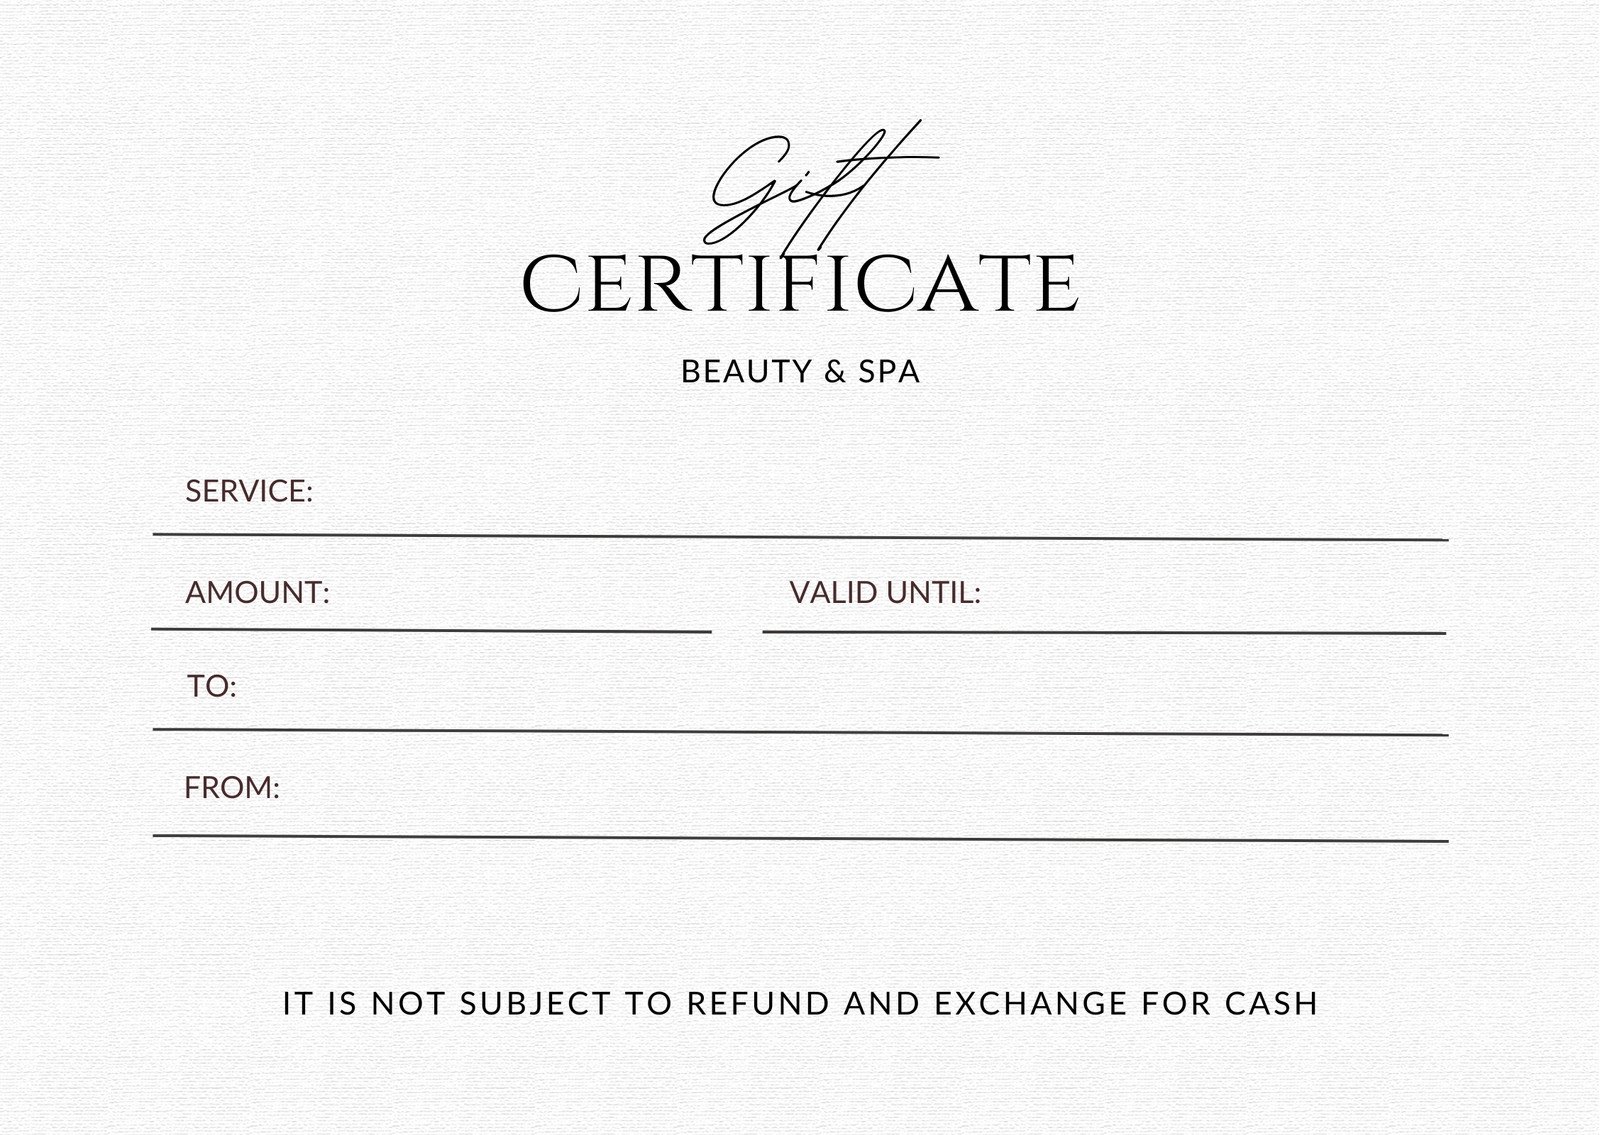 Promos/Gift Certificates | Sawaddee Massage & Wellness